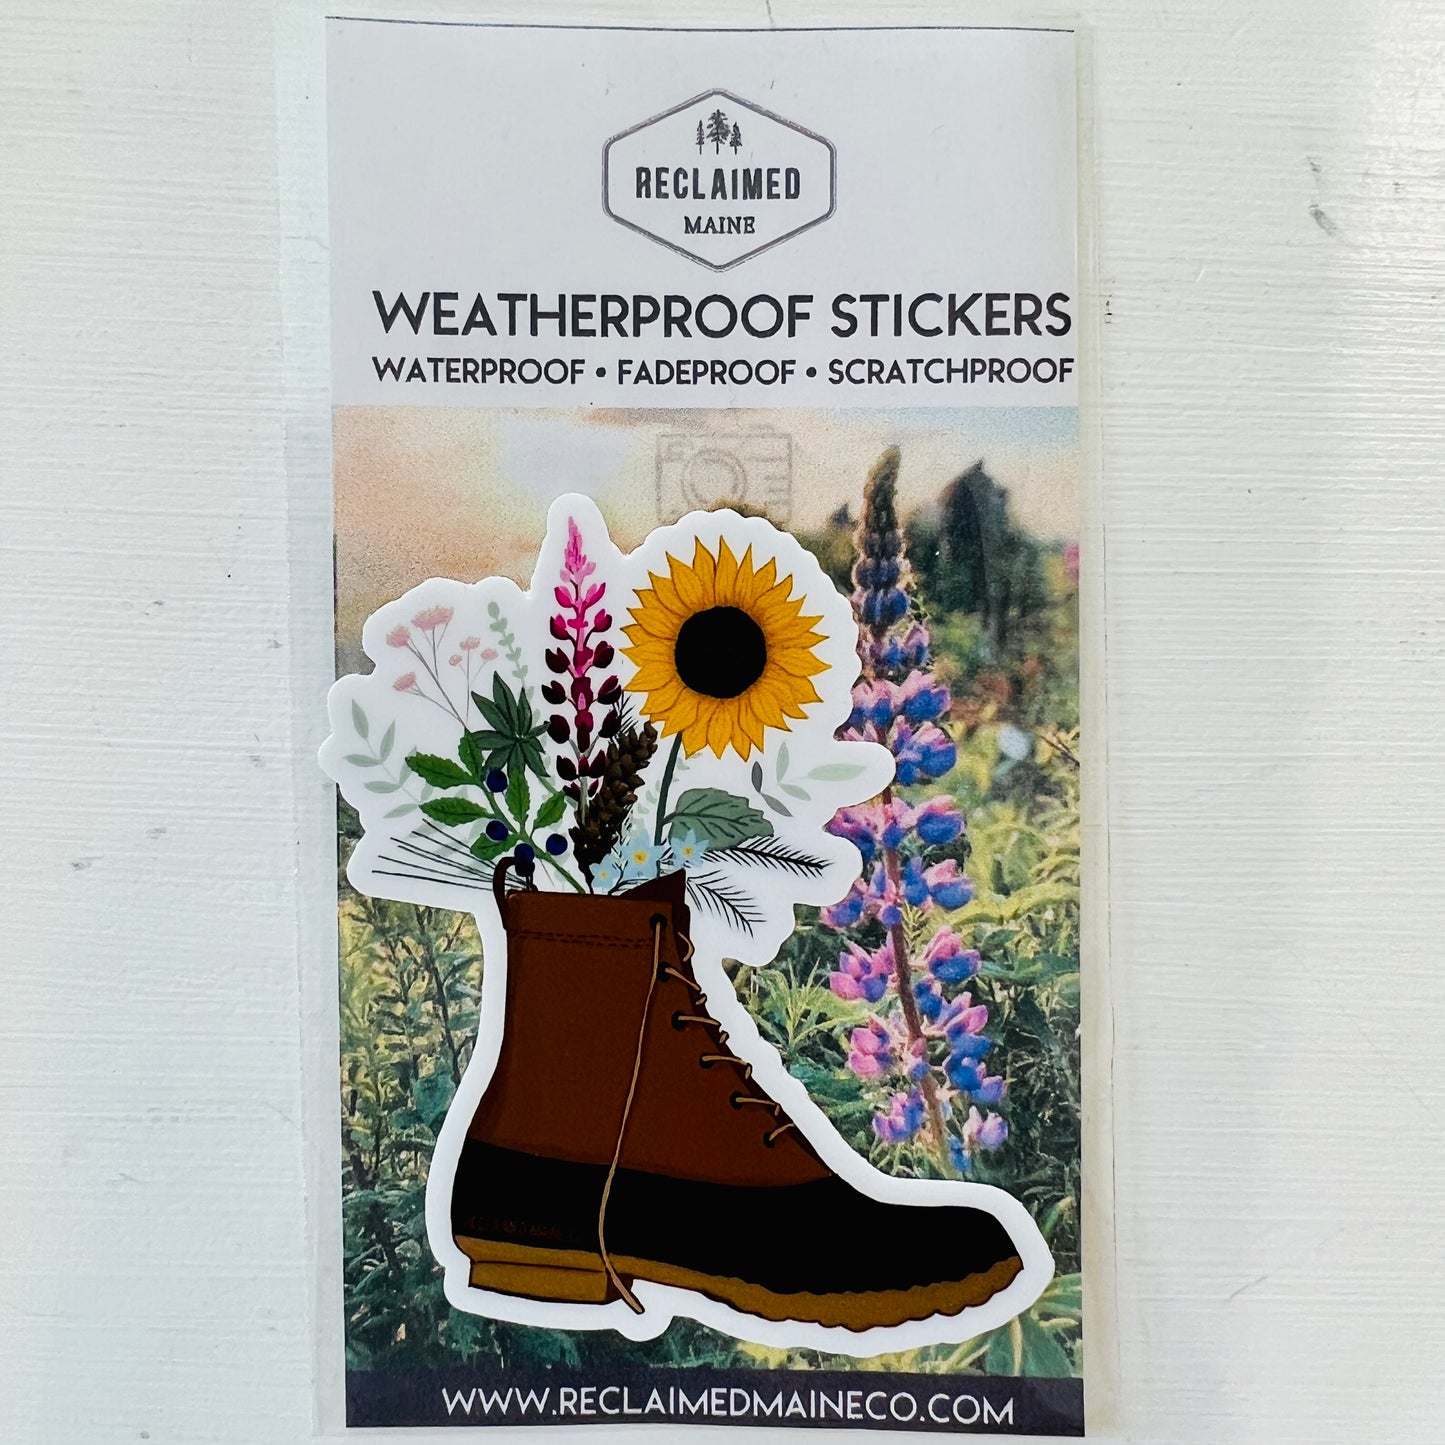 Reclaimed Maine - Weatherproof Stickers